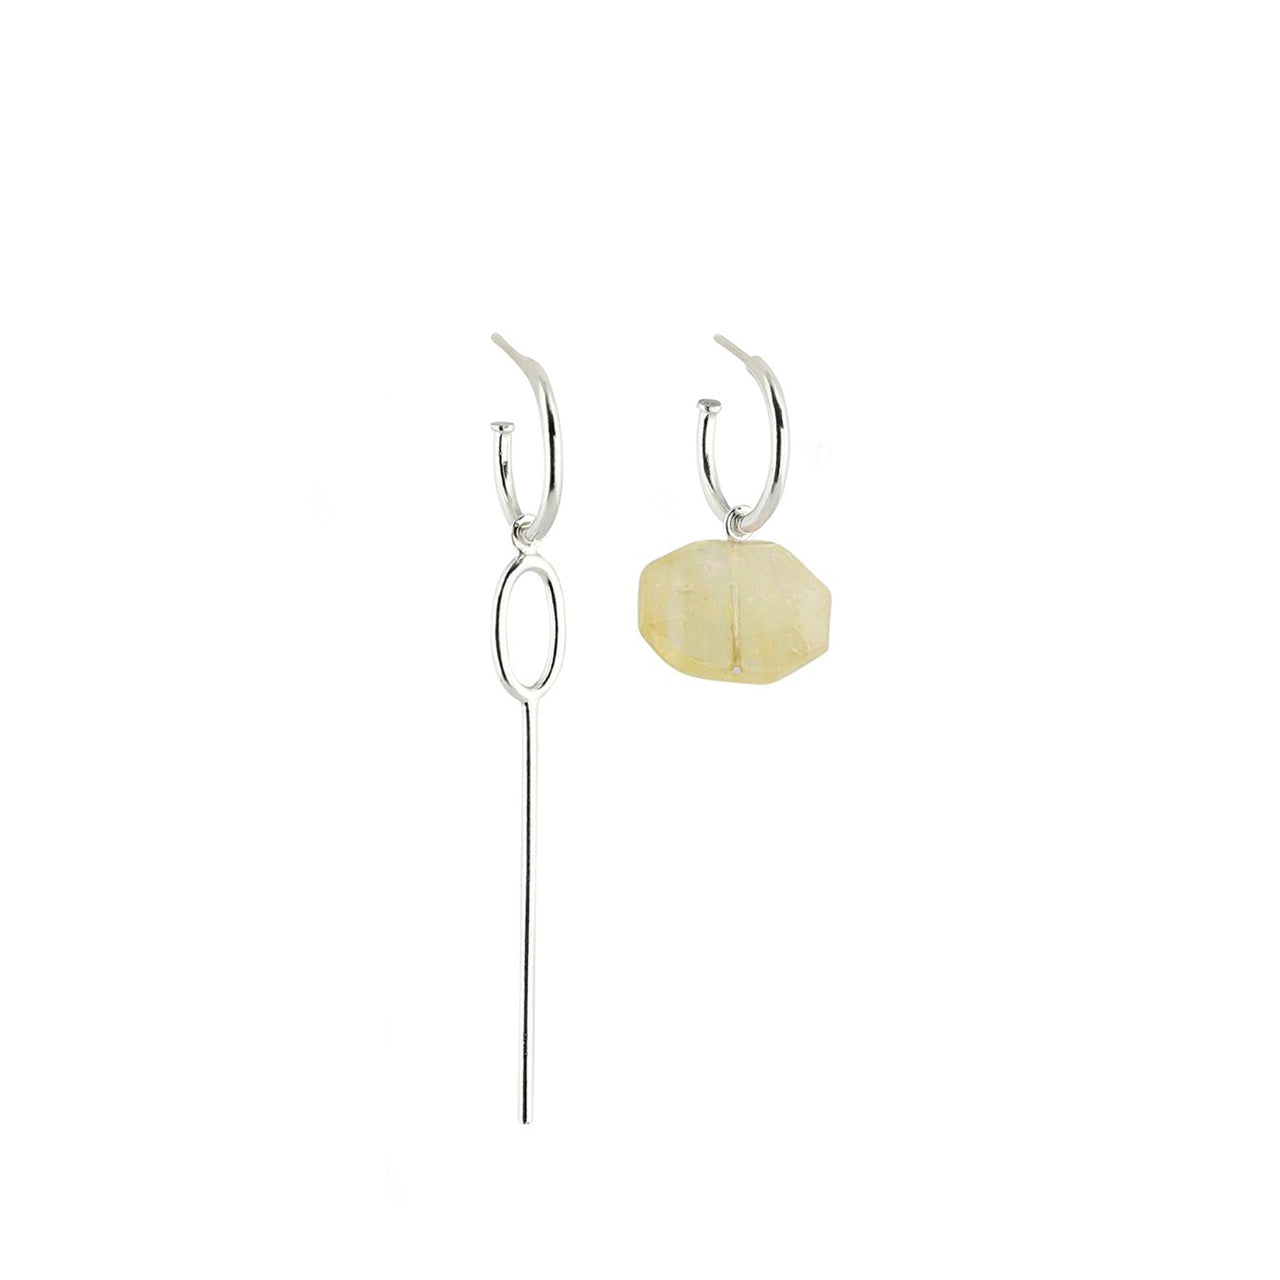 Bauspiel earrings with citrine